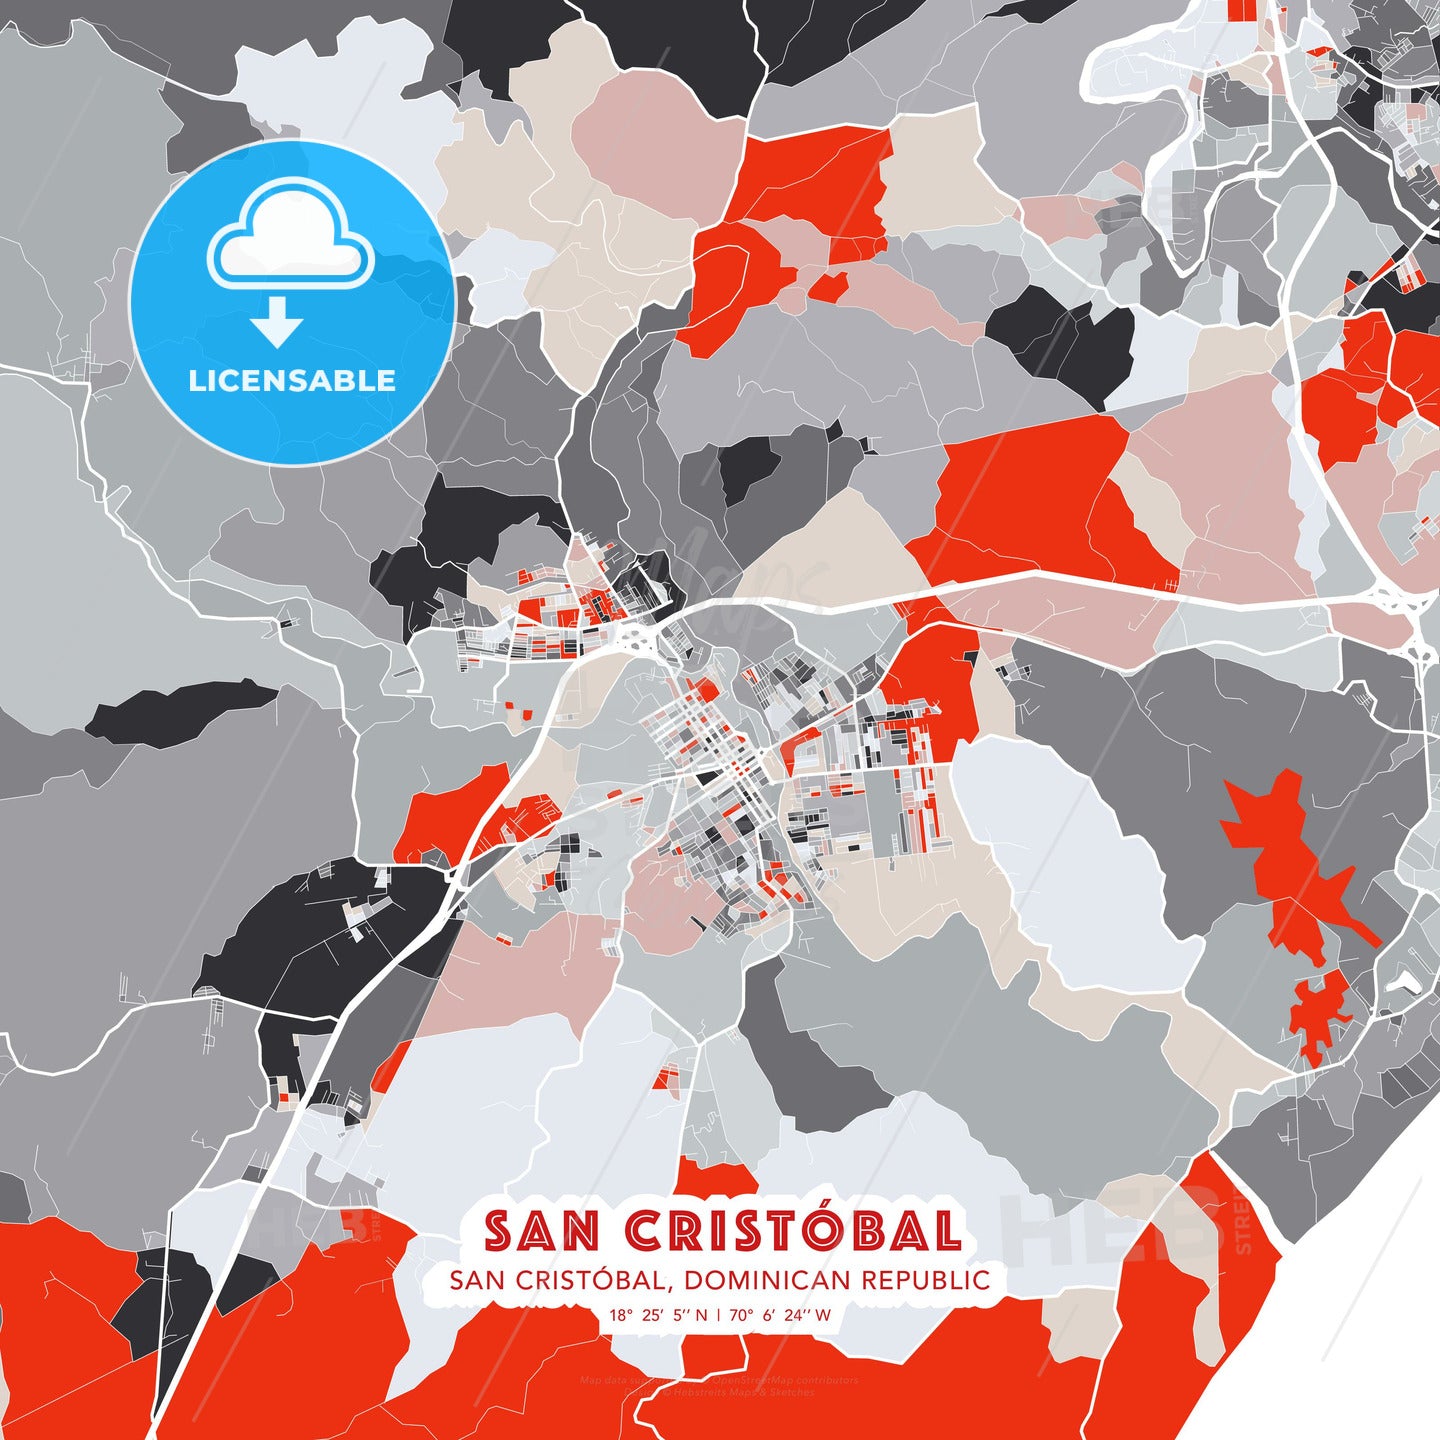 San Cristóbal, San Cristóbal, Dominican Republic, modern map - HEBSTREITS Sketches